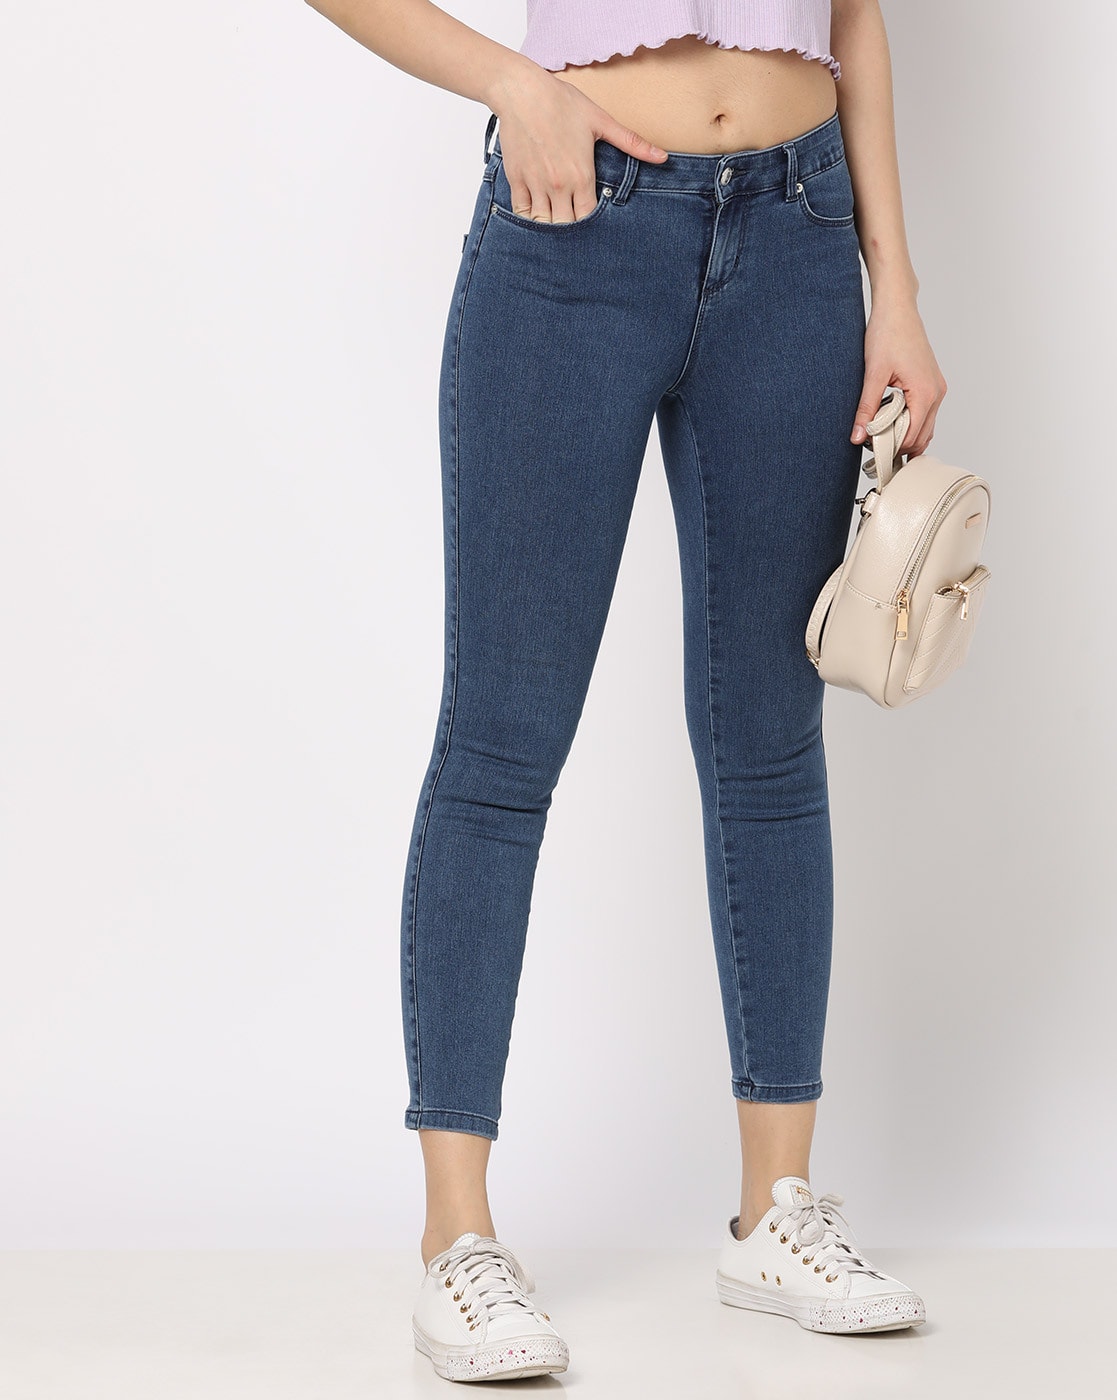 Buy Blue Jeans & Jeggings for Women by ISCENERY BY VERO MODA | Ajio.com